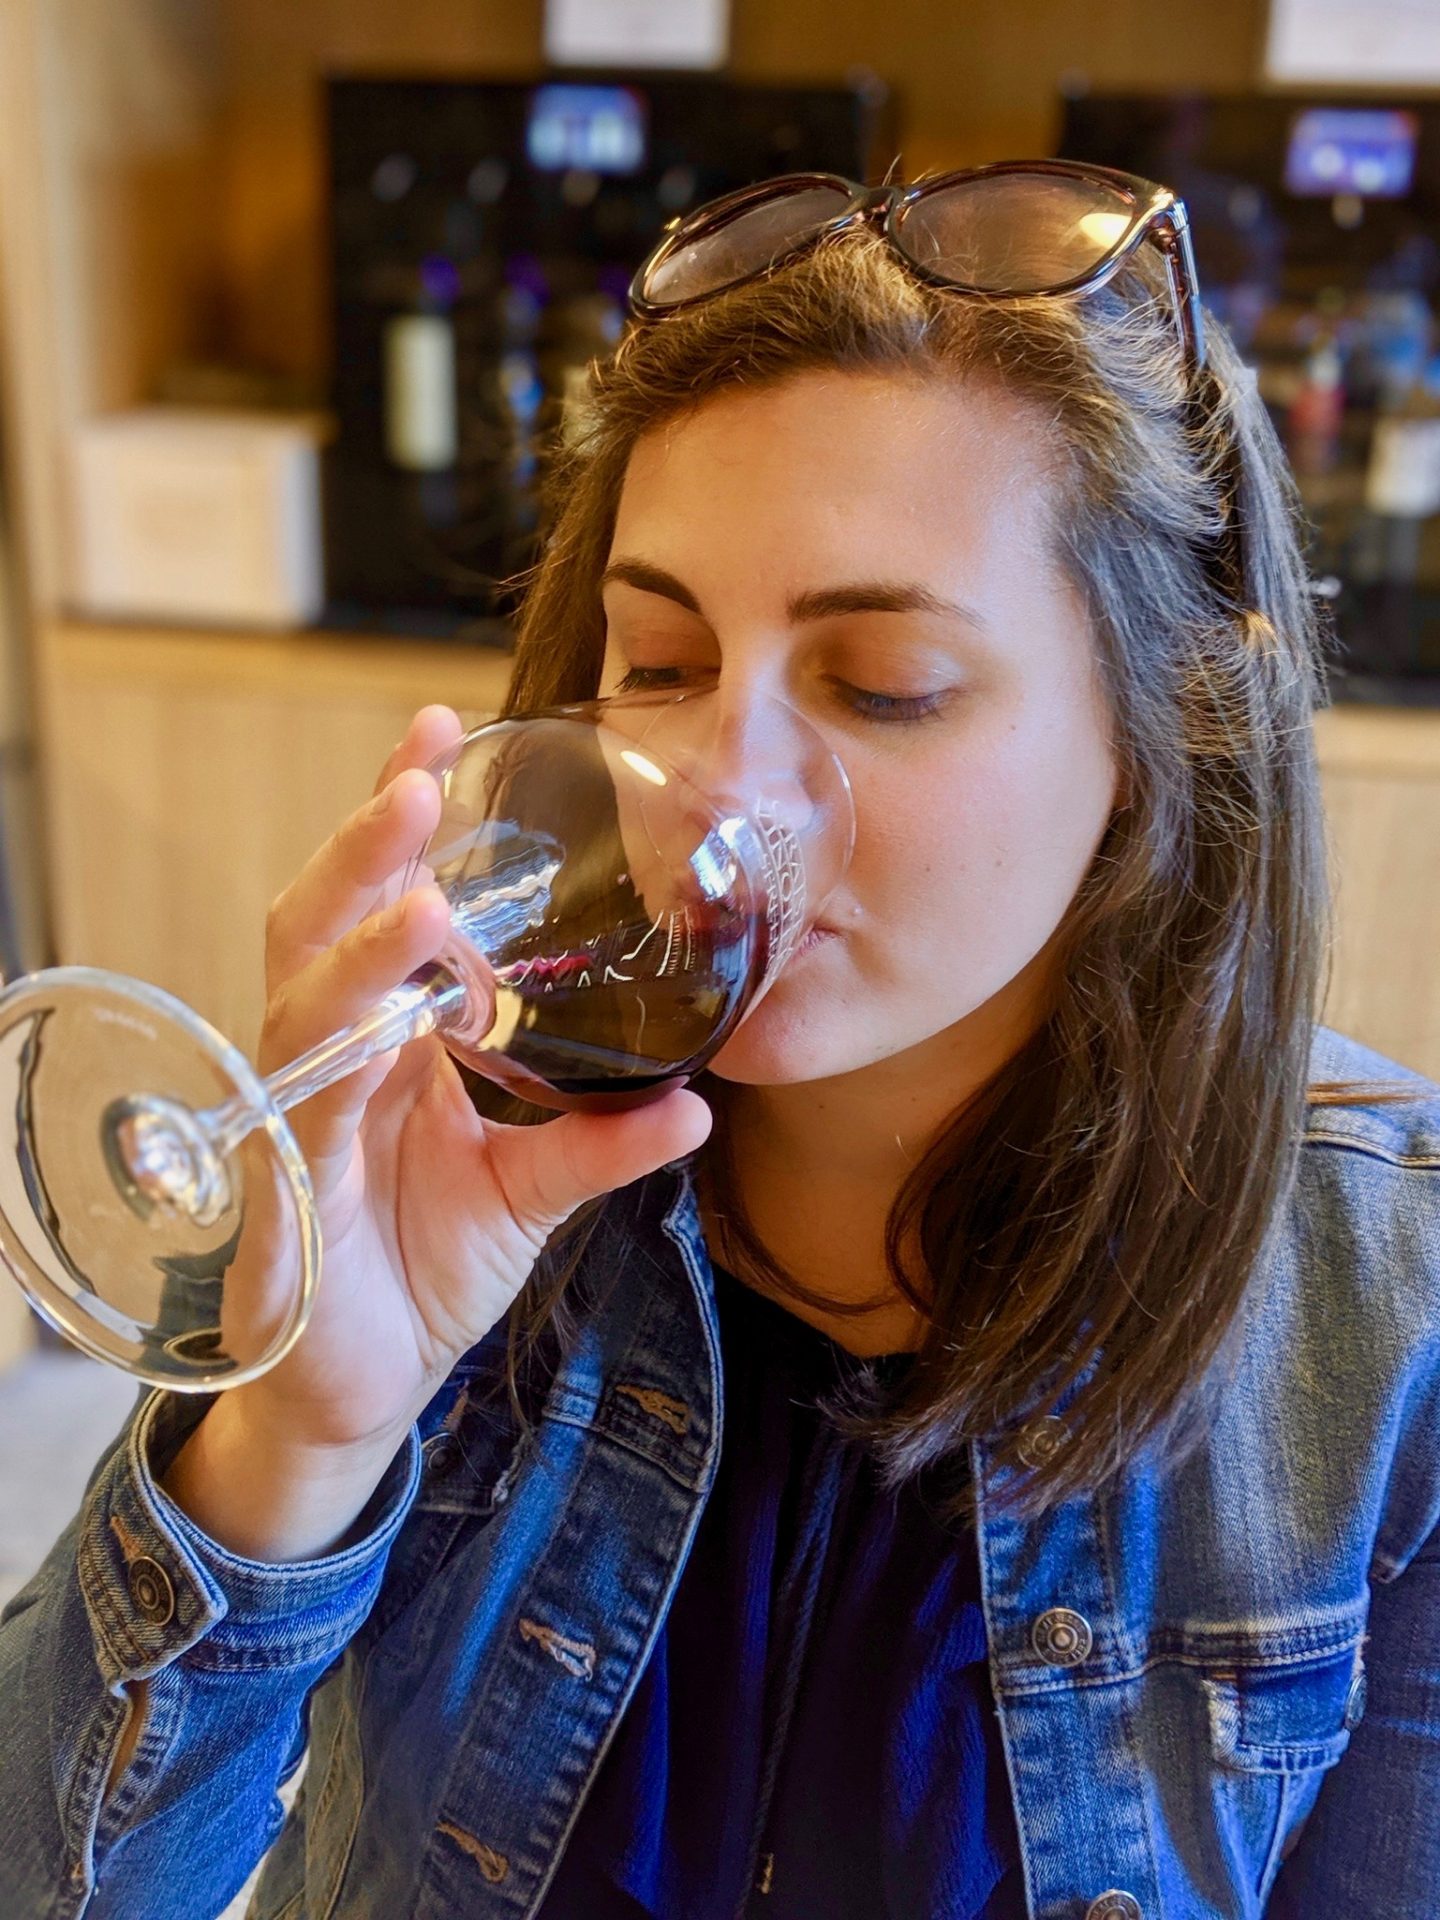 24 hours in Ljubljana food & wine: Nell tasting a glass of red wine at Strelec wine bar at Ljubljana castle